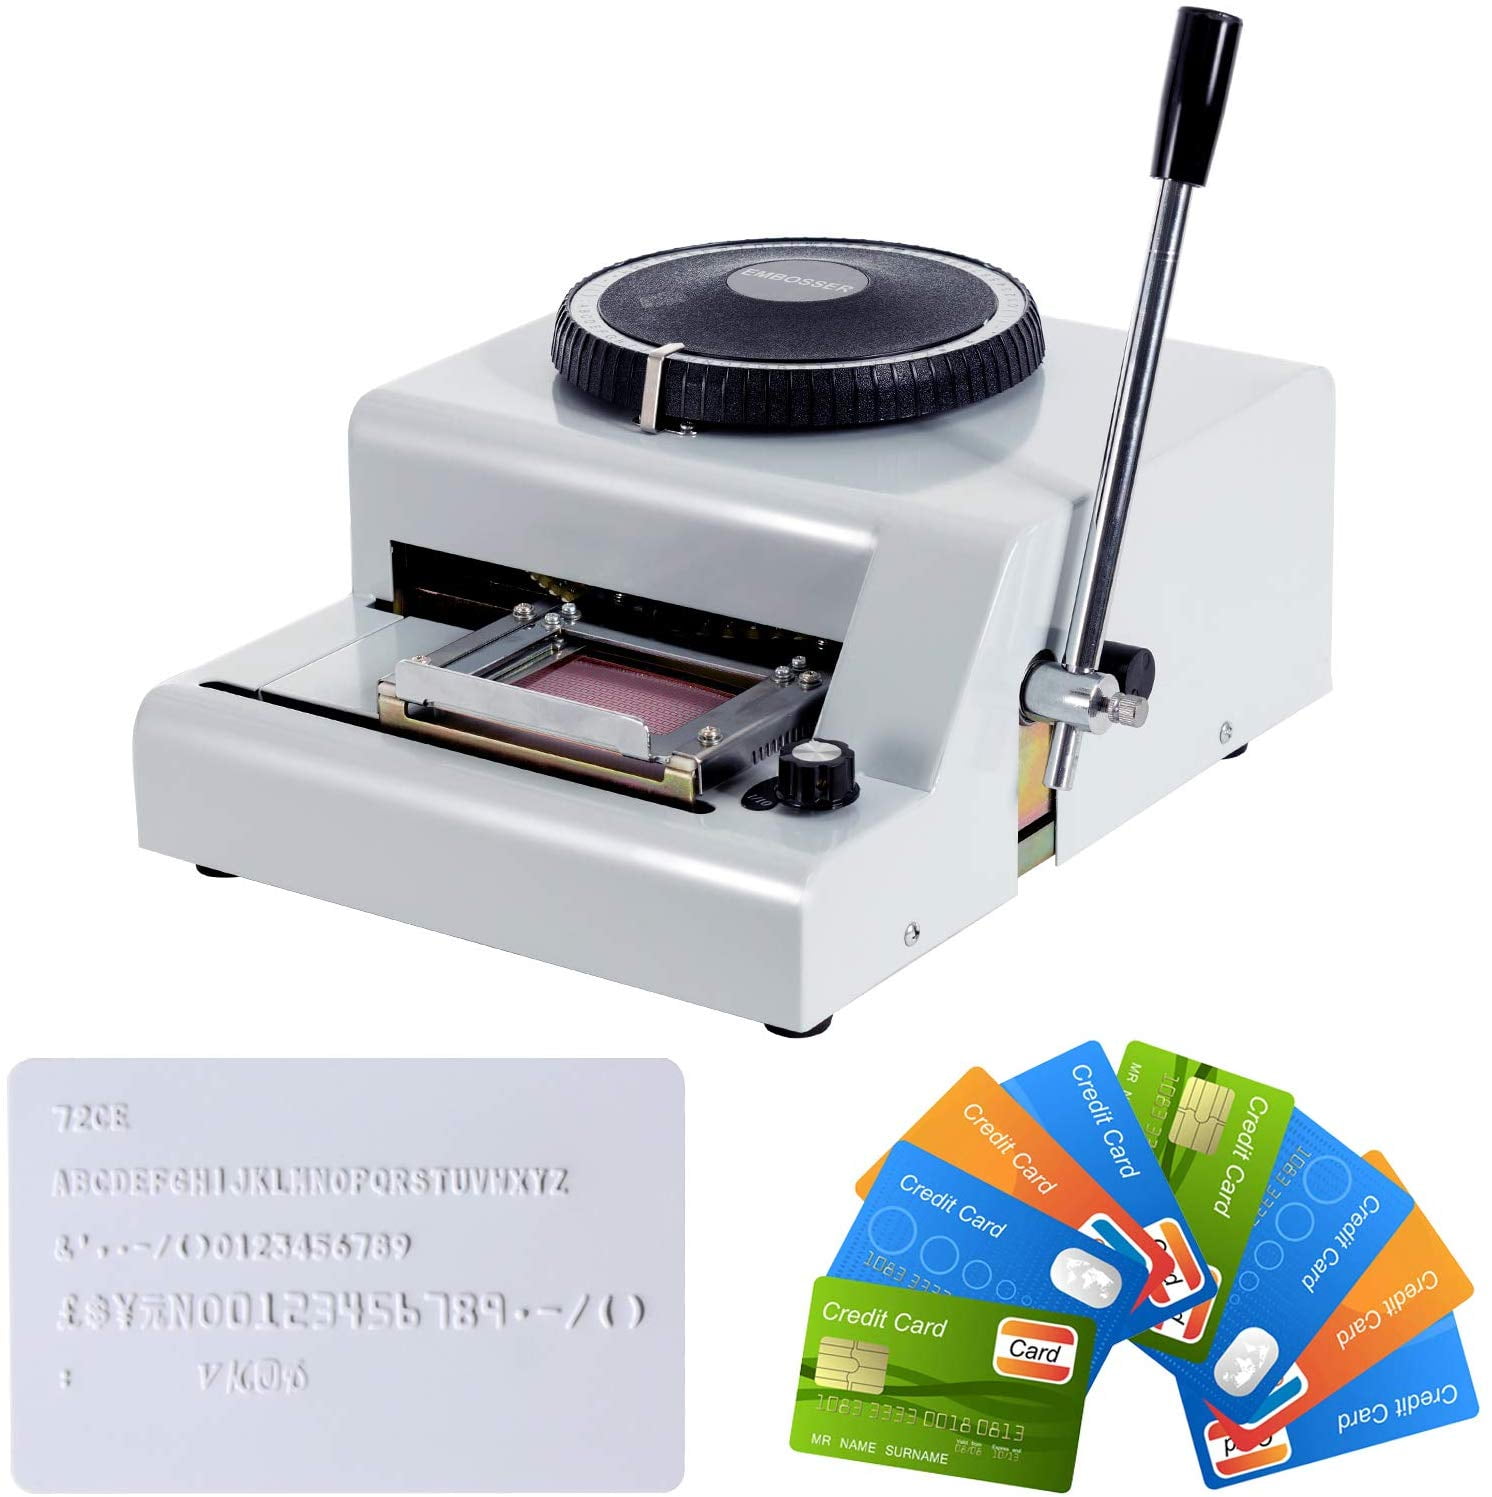 carta manuale Embosser Stamping codice stampante per PVC//Credito//ID//VIP//Membership Gift Card SUSEMSE 72 caratteri goffratura macchina